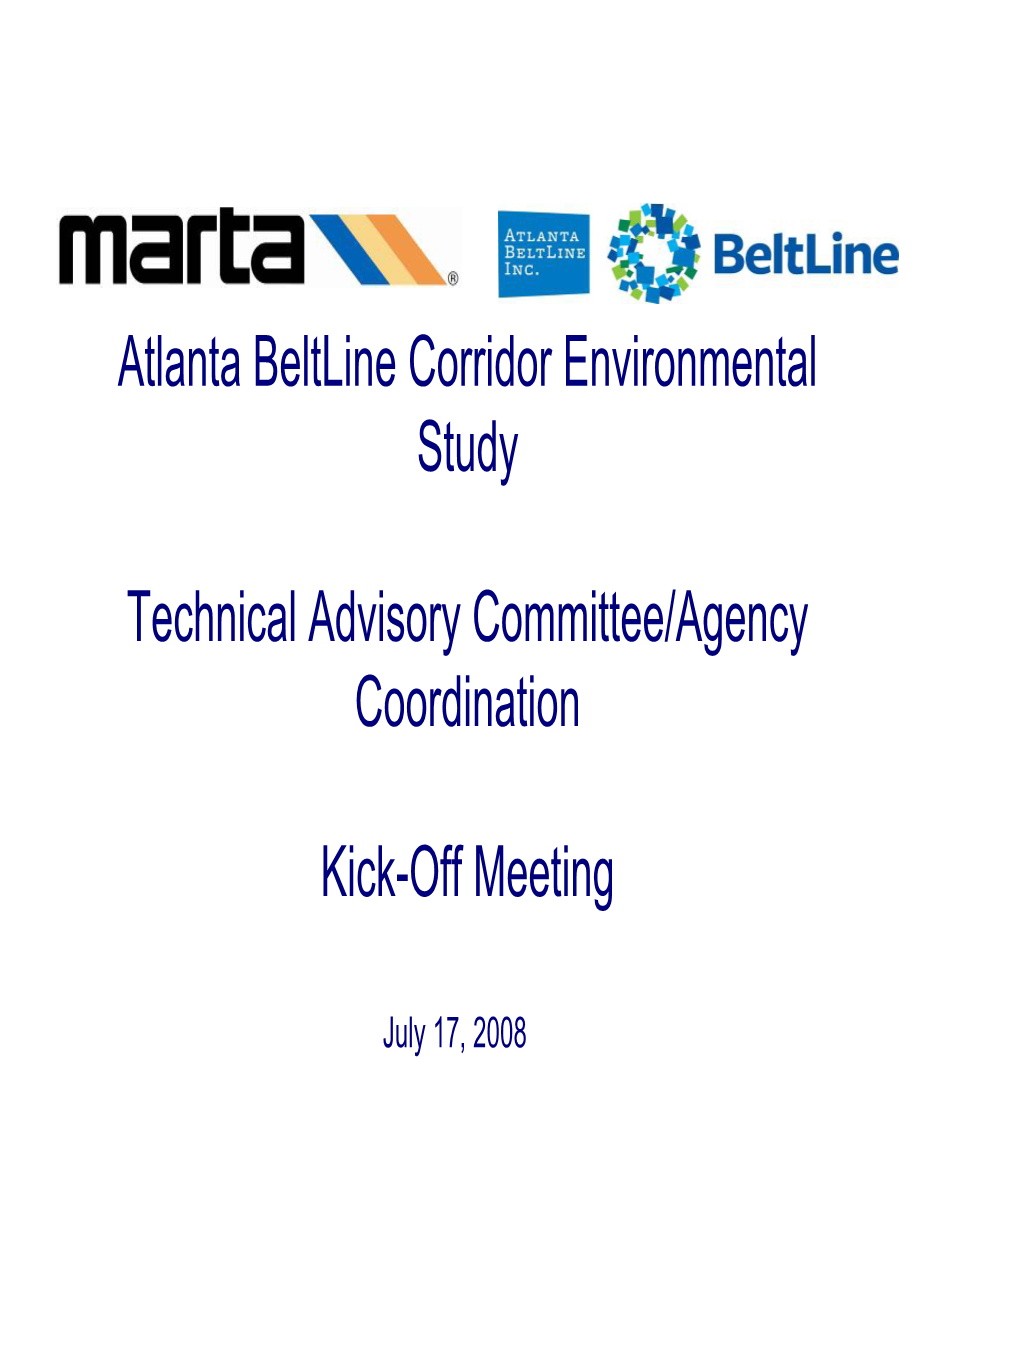 Atlanta Beltline Corridor Environmental Study Technical